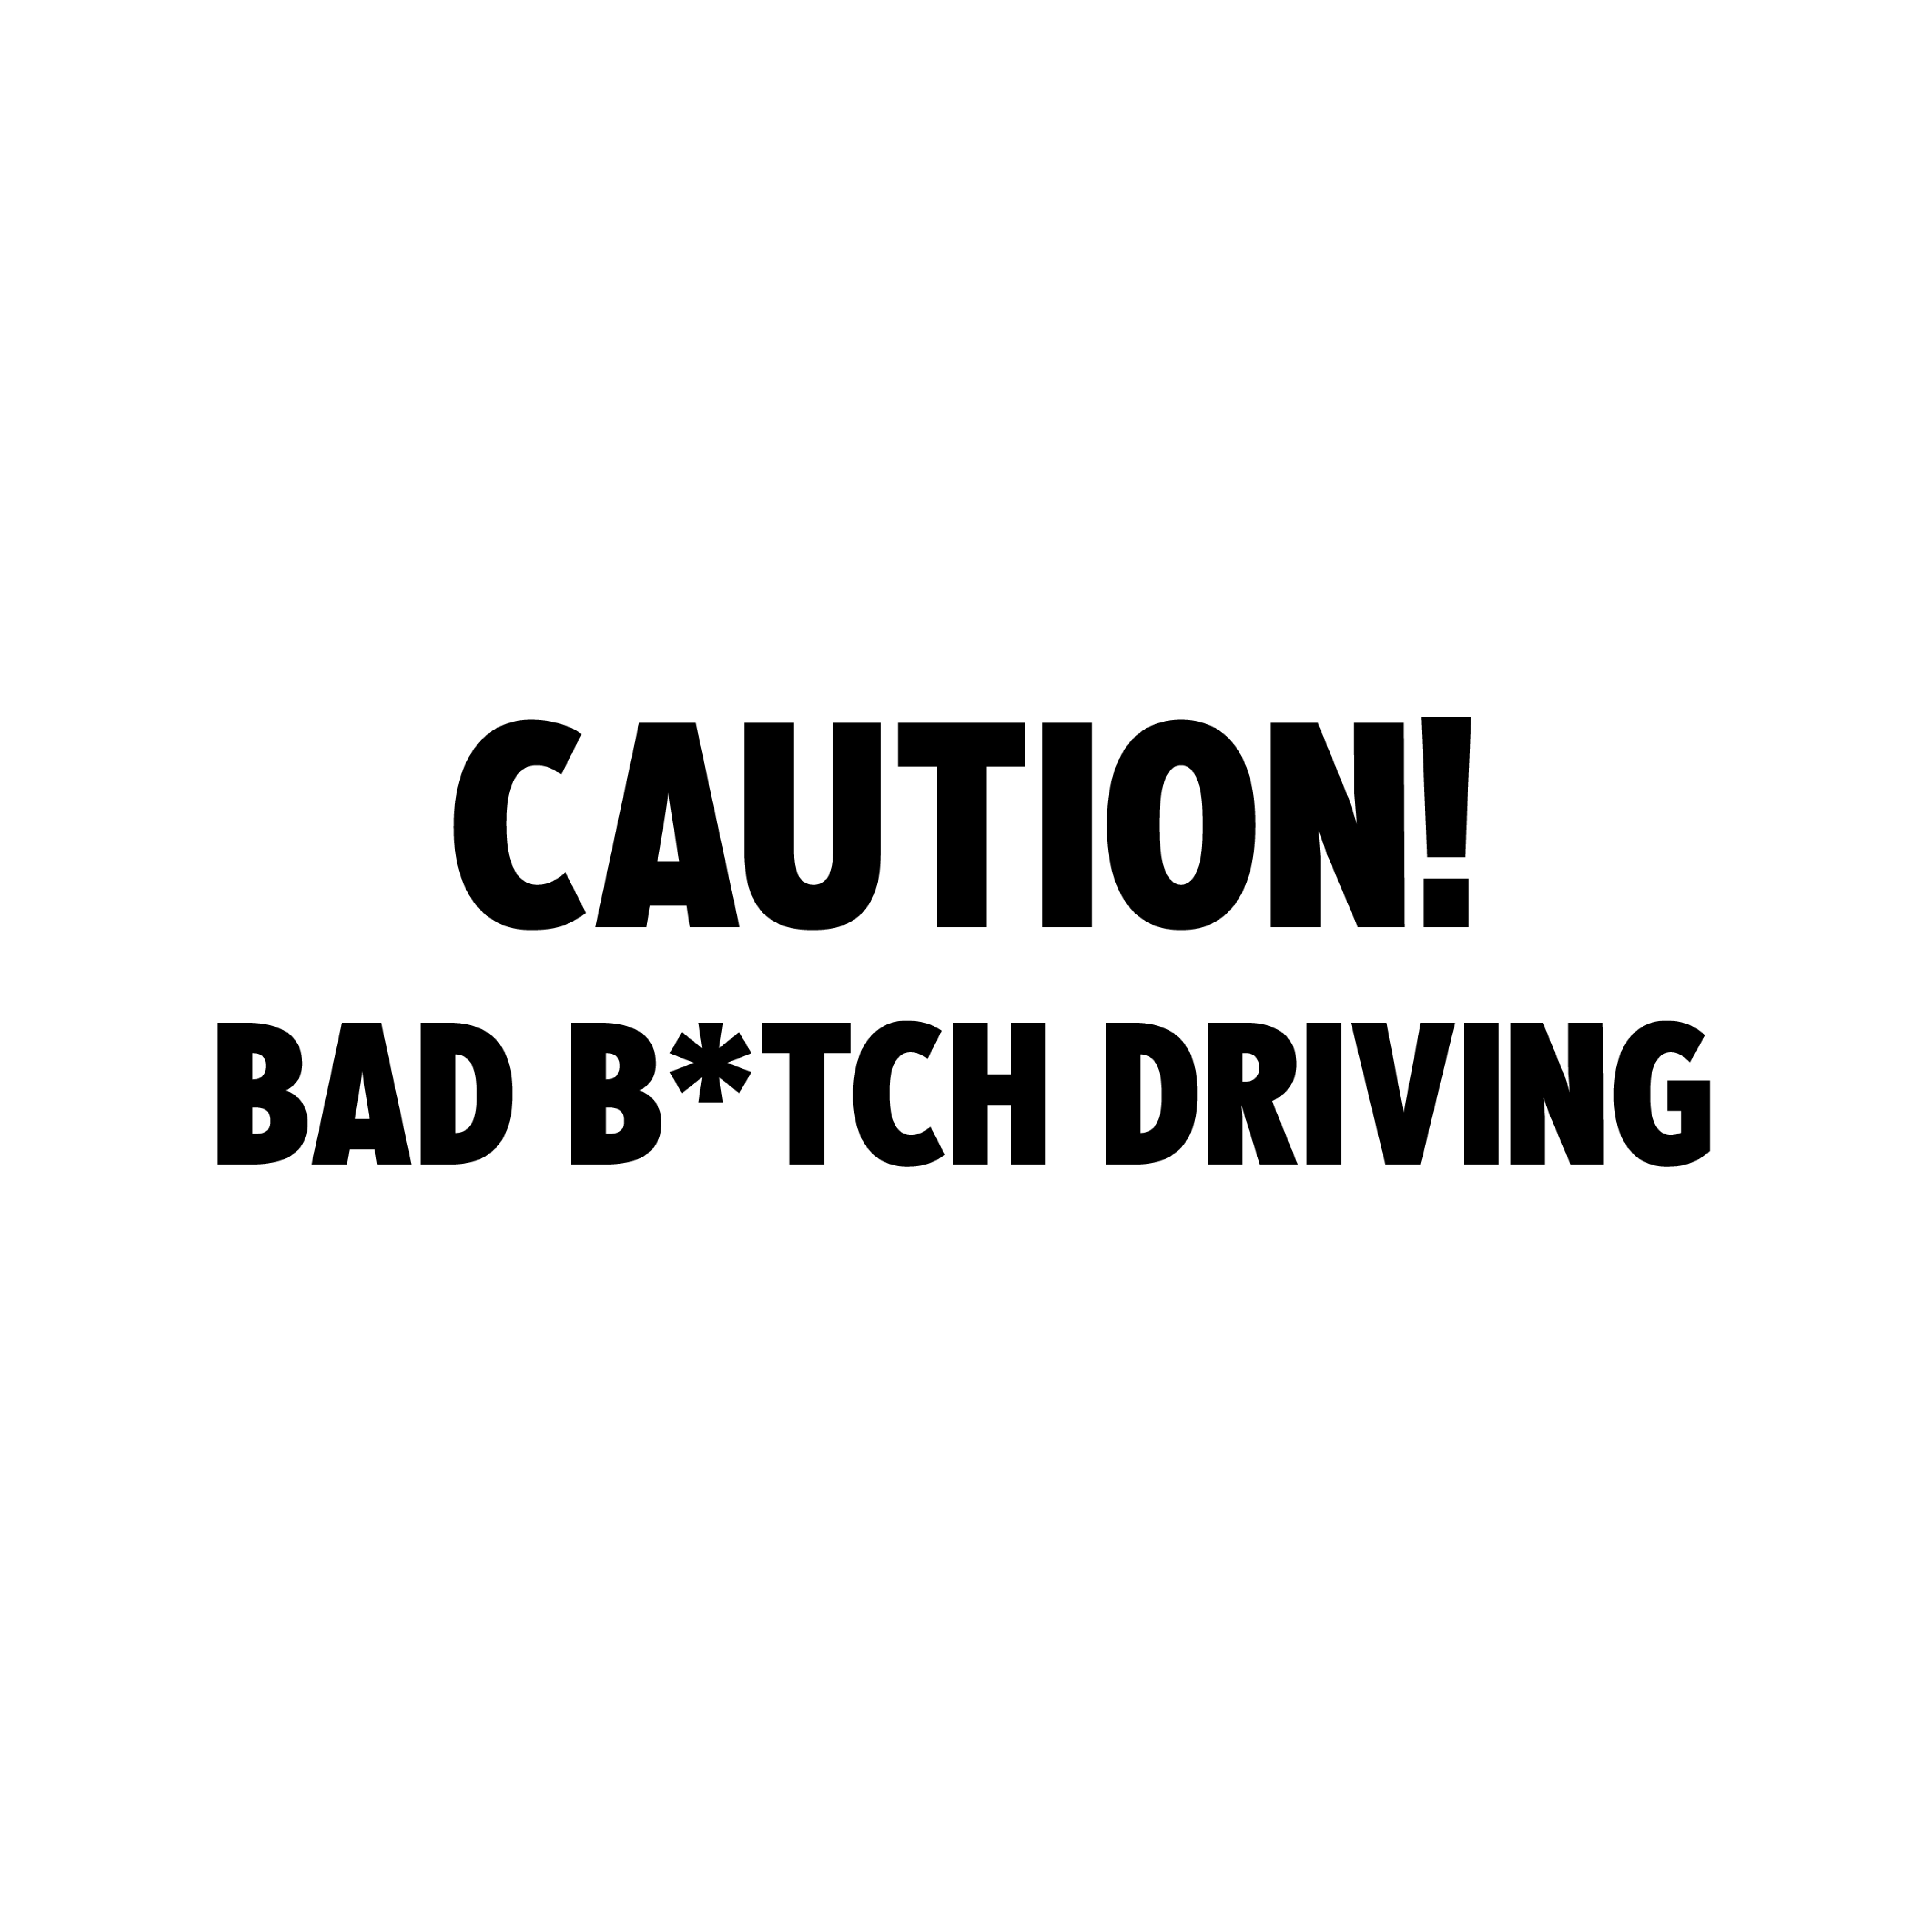 Caution bad b*tch decal